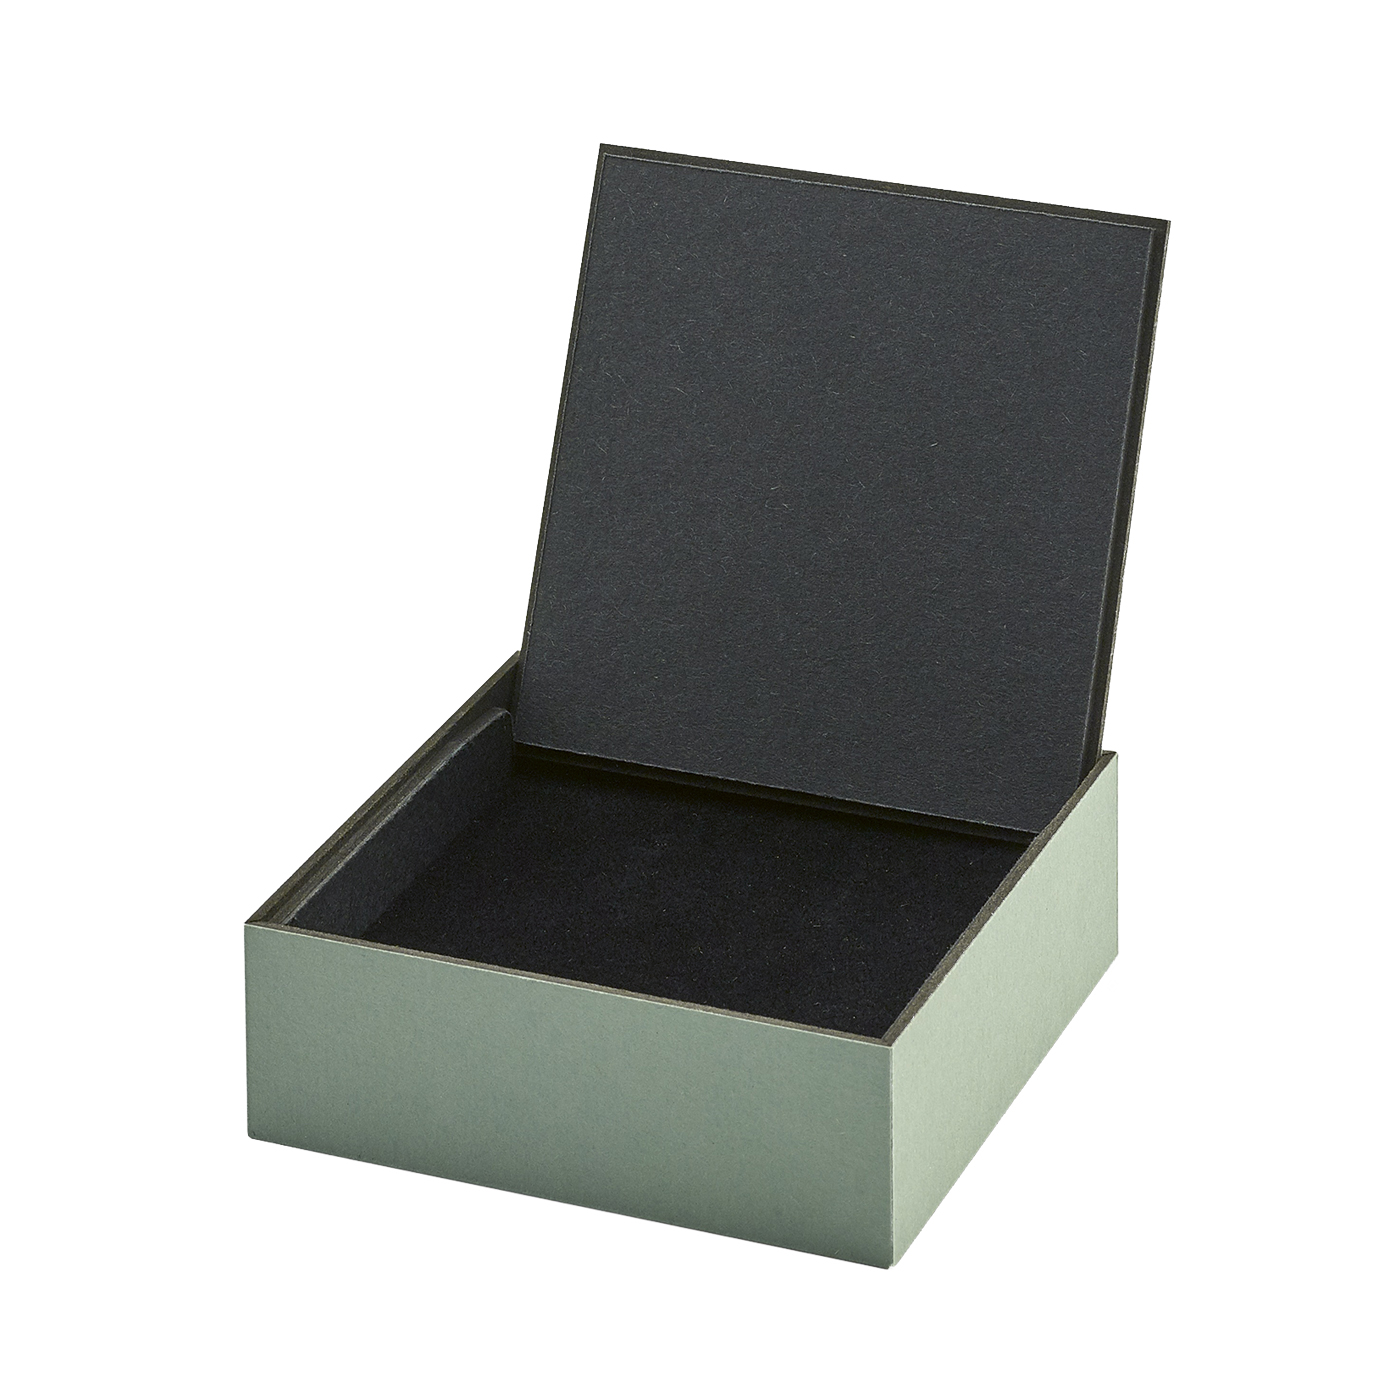 PICA-Design Schmucketui "Flipbox", graugrün, 90 x 90 x 30 mm - 1 Stück